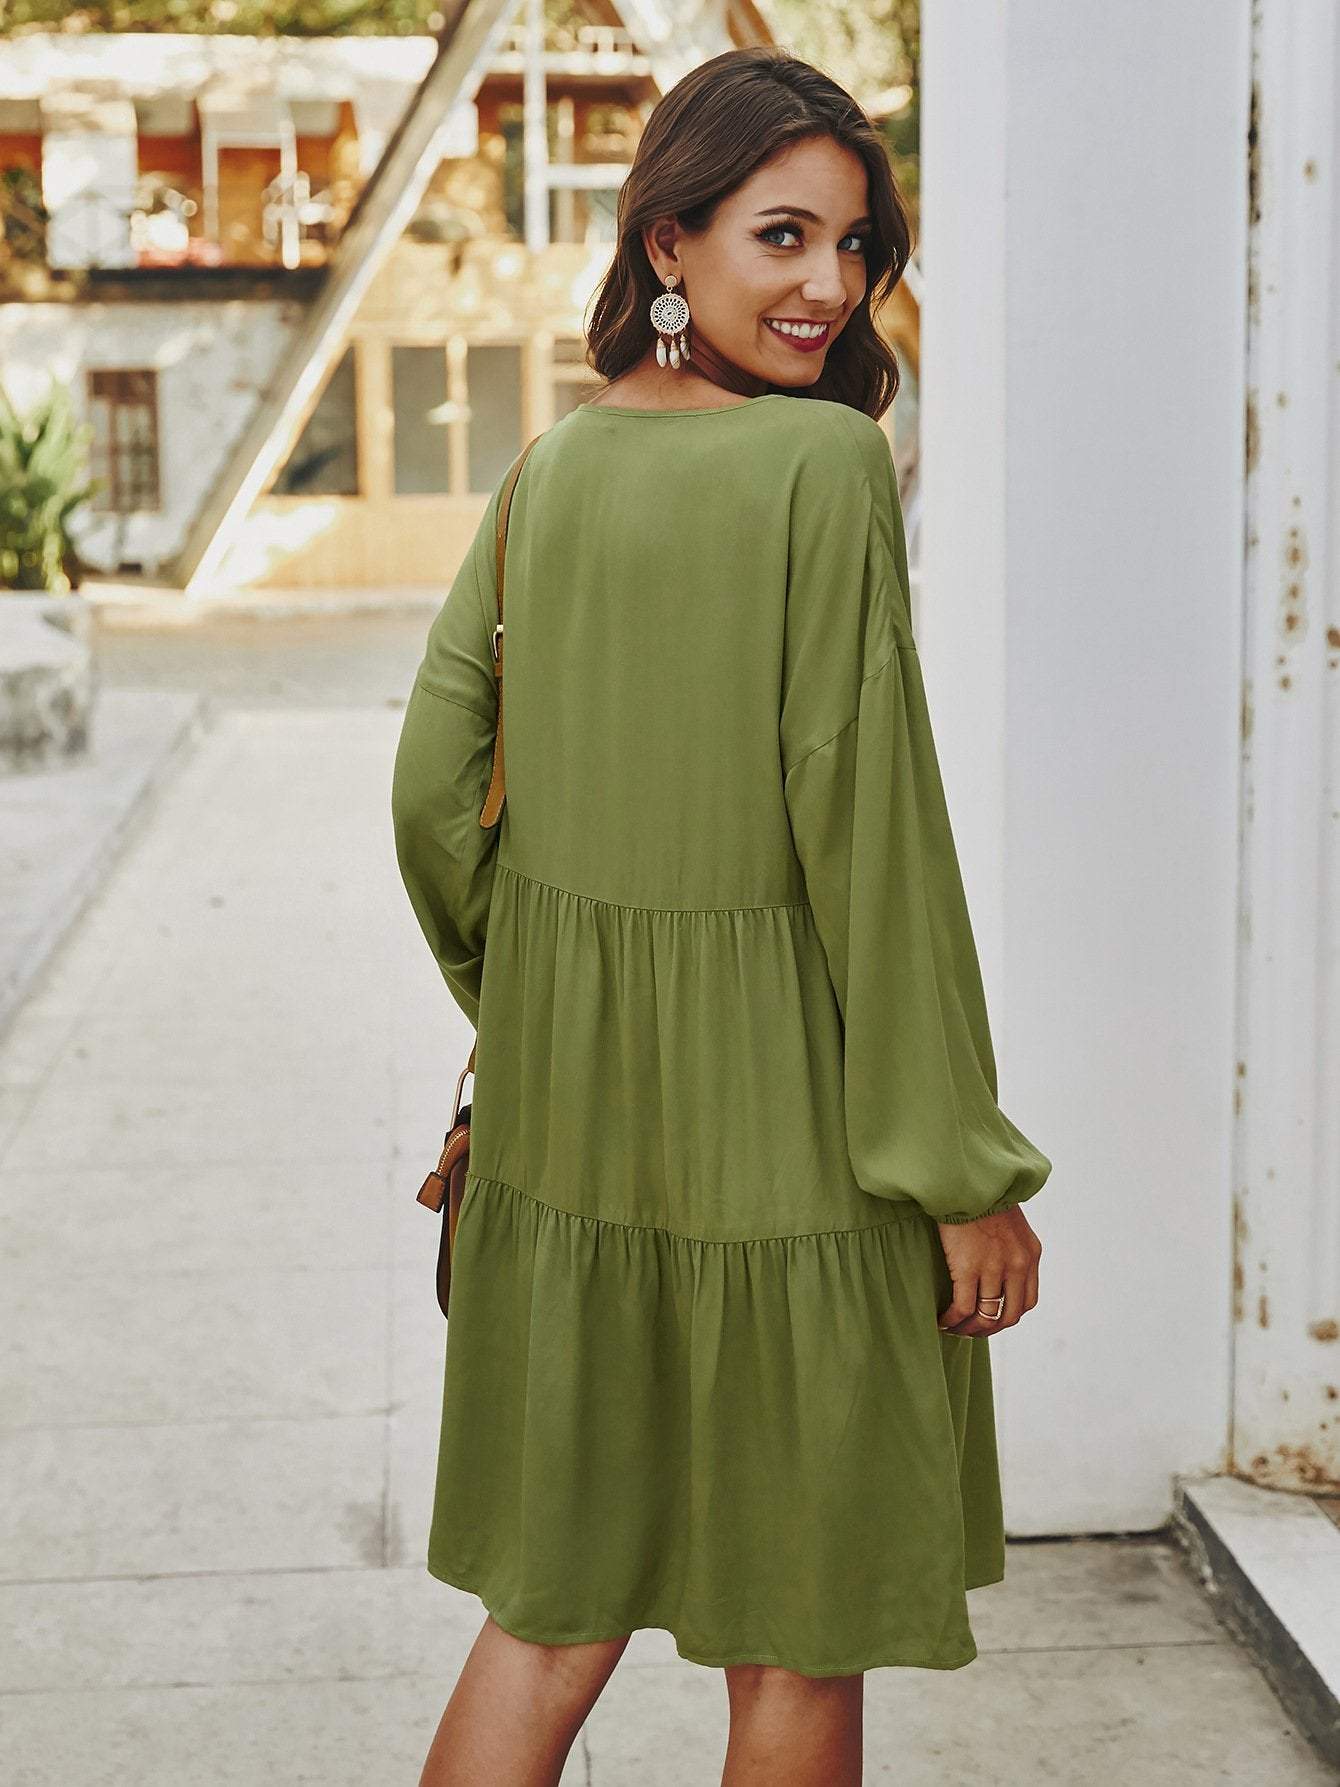 Groovy Long Sleeve Plain Green Mini Dress